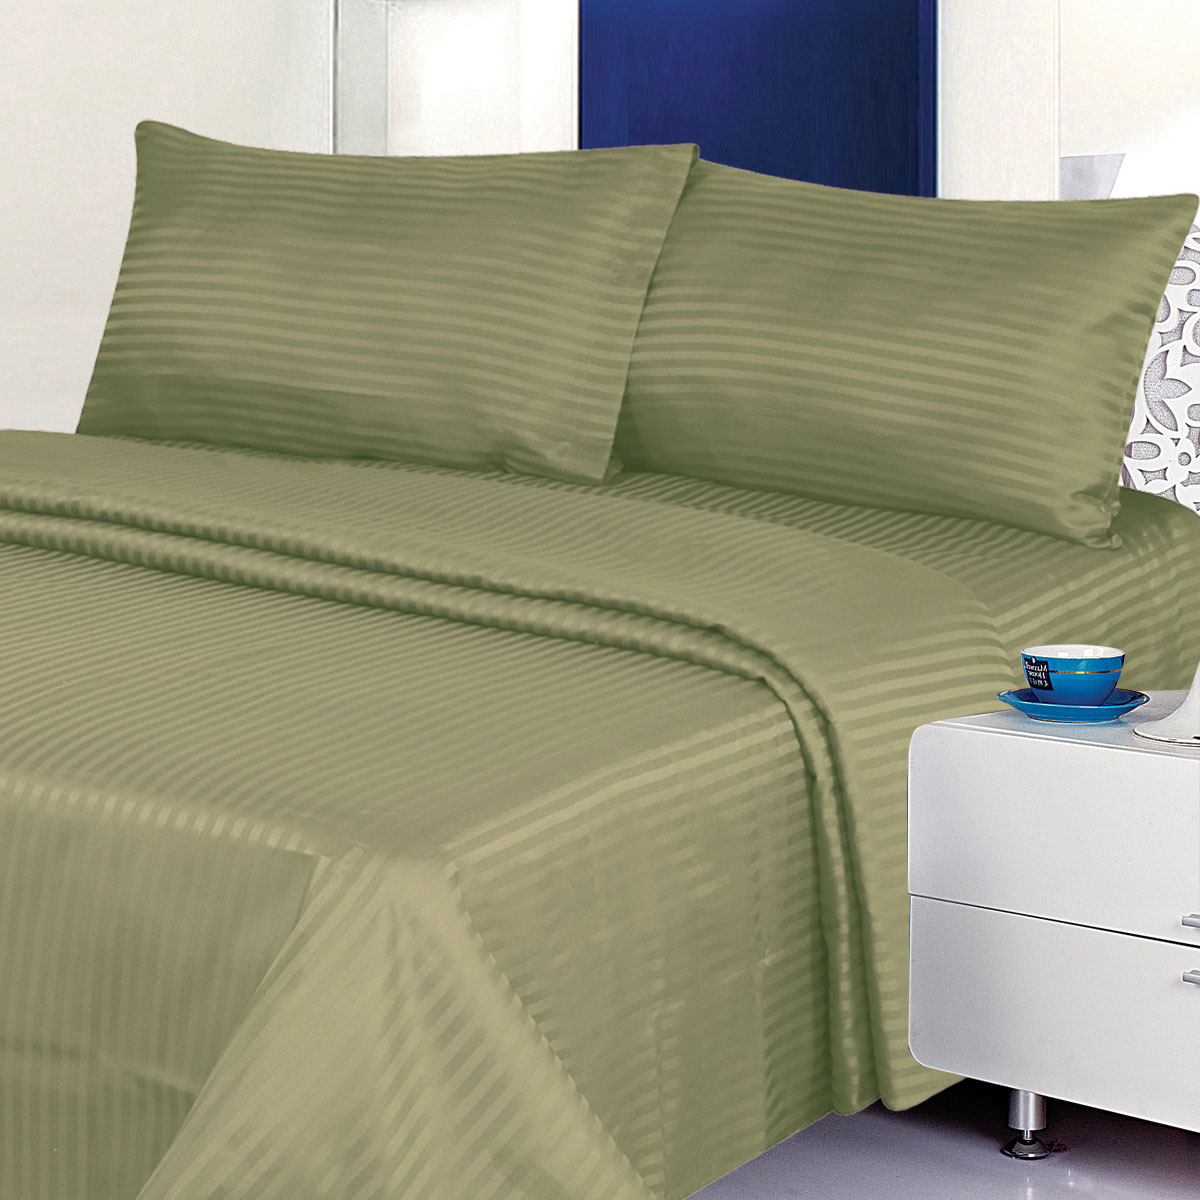 Deluxe 6PC Classic Cotton-Blend Sateen Dobby Stripe Bed Sheet Set - Full, Burgundy